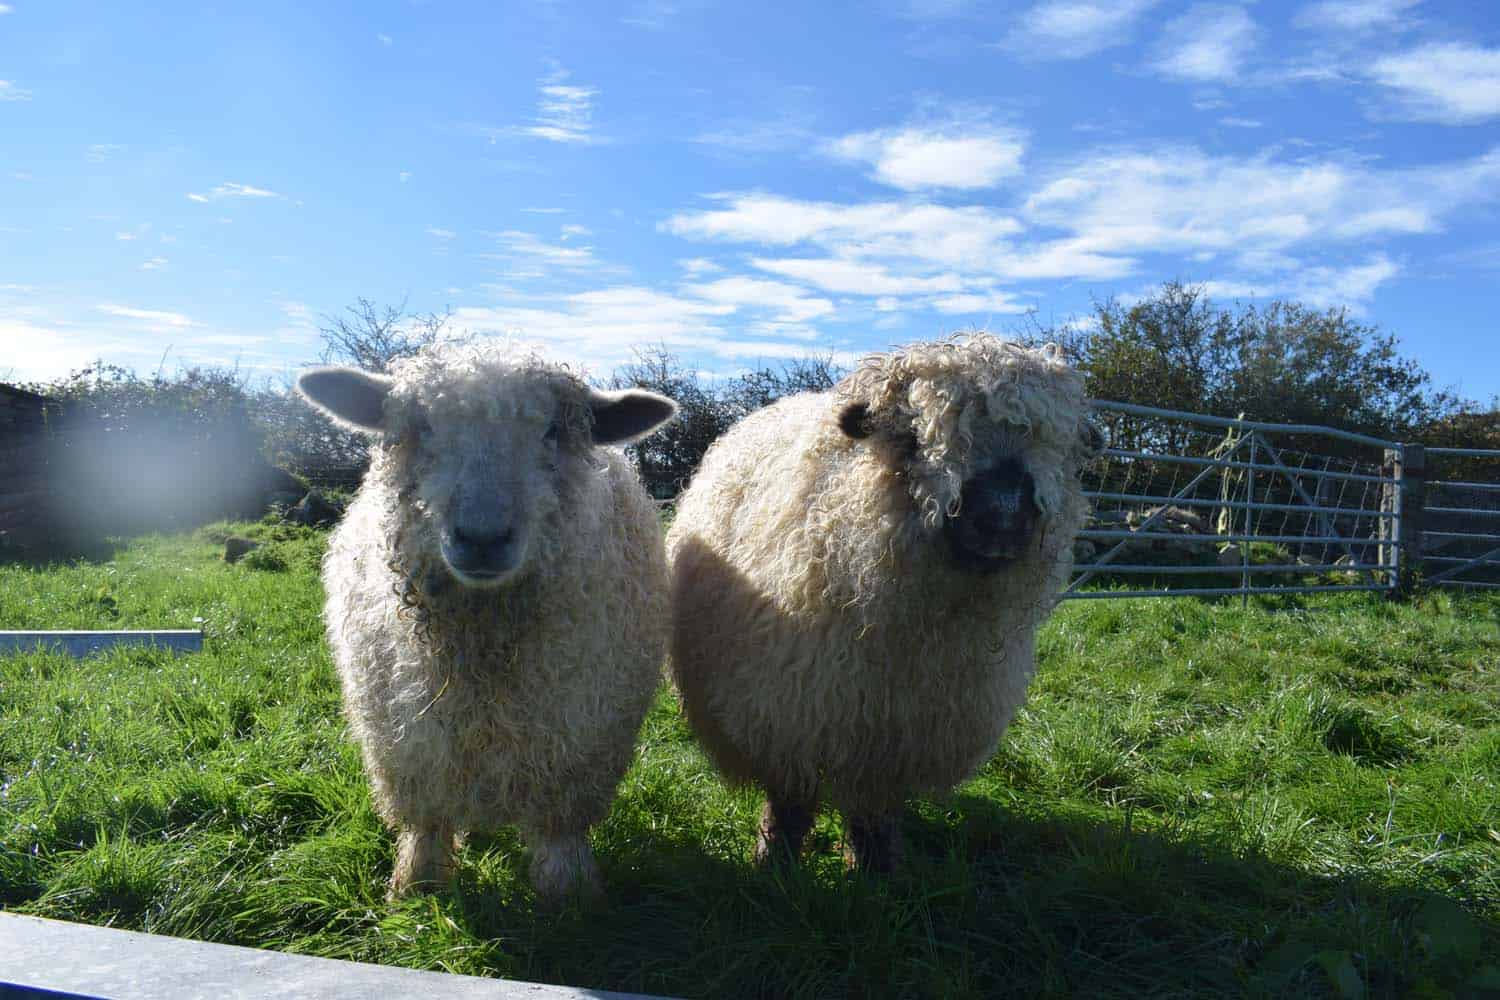 Nora valais blacknose greyface dartmoor pet sheep cuddle bear sheep patchworksheep crueltyfree felt rugs alice